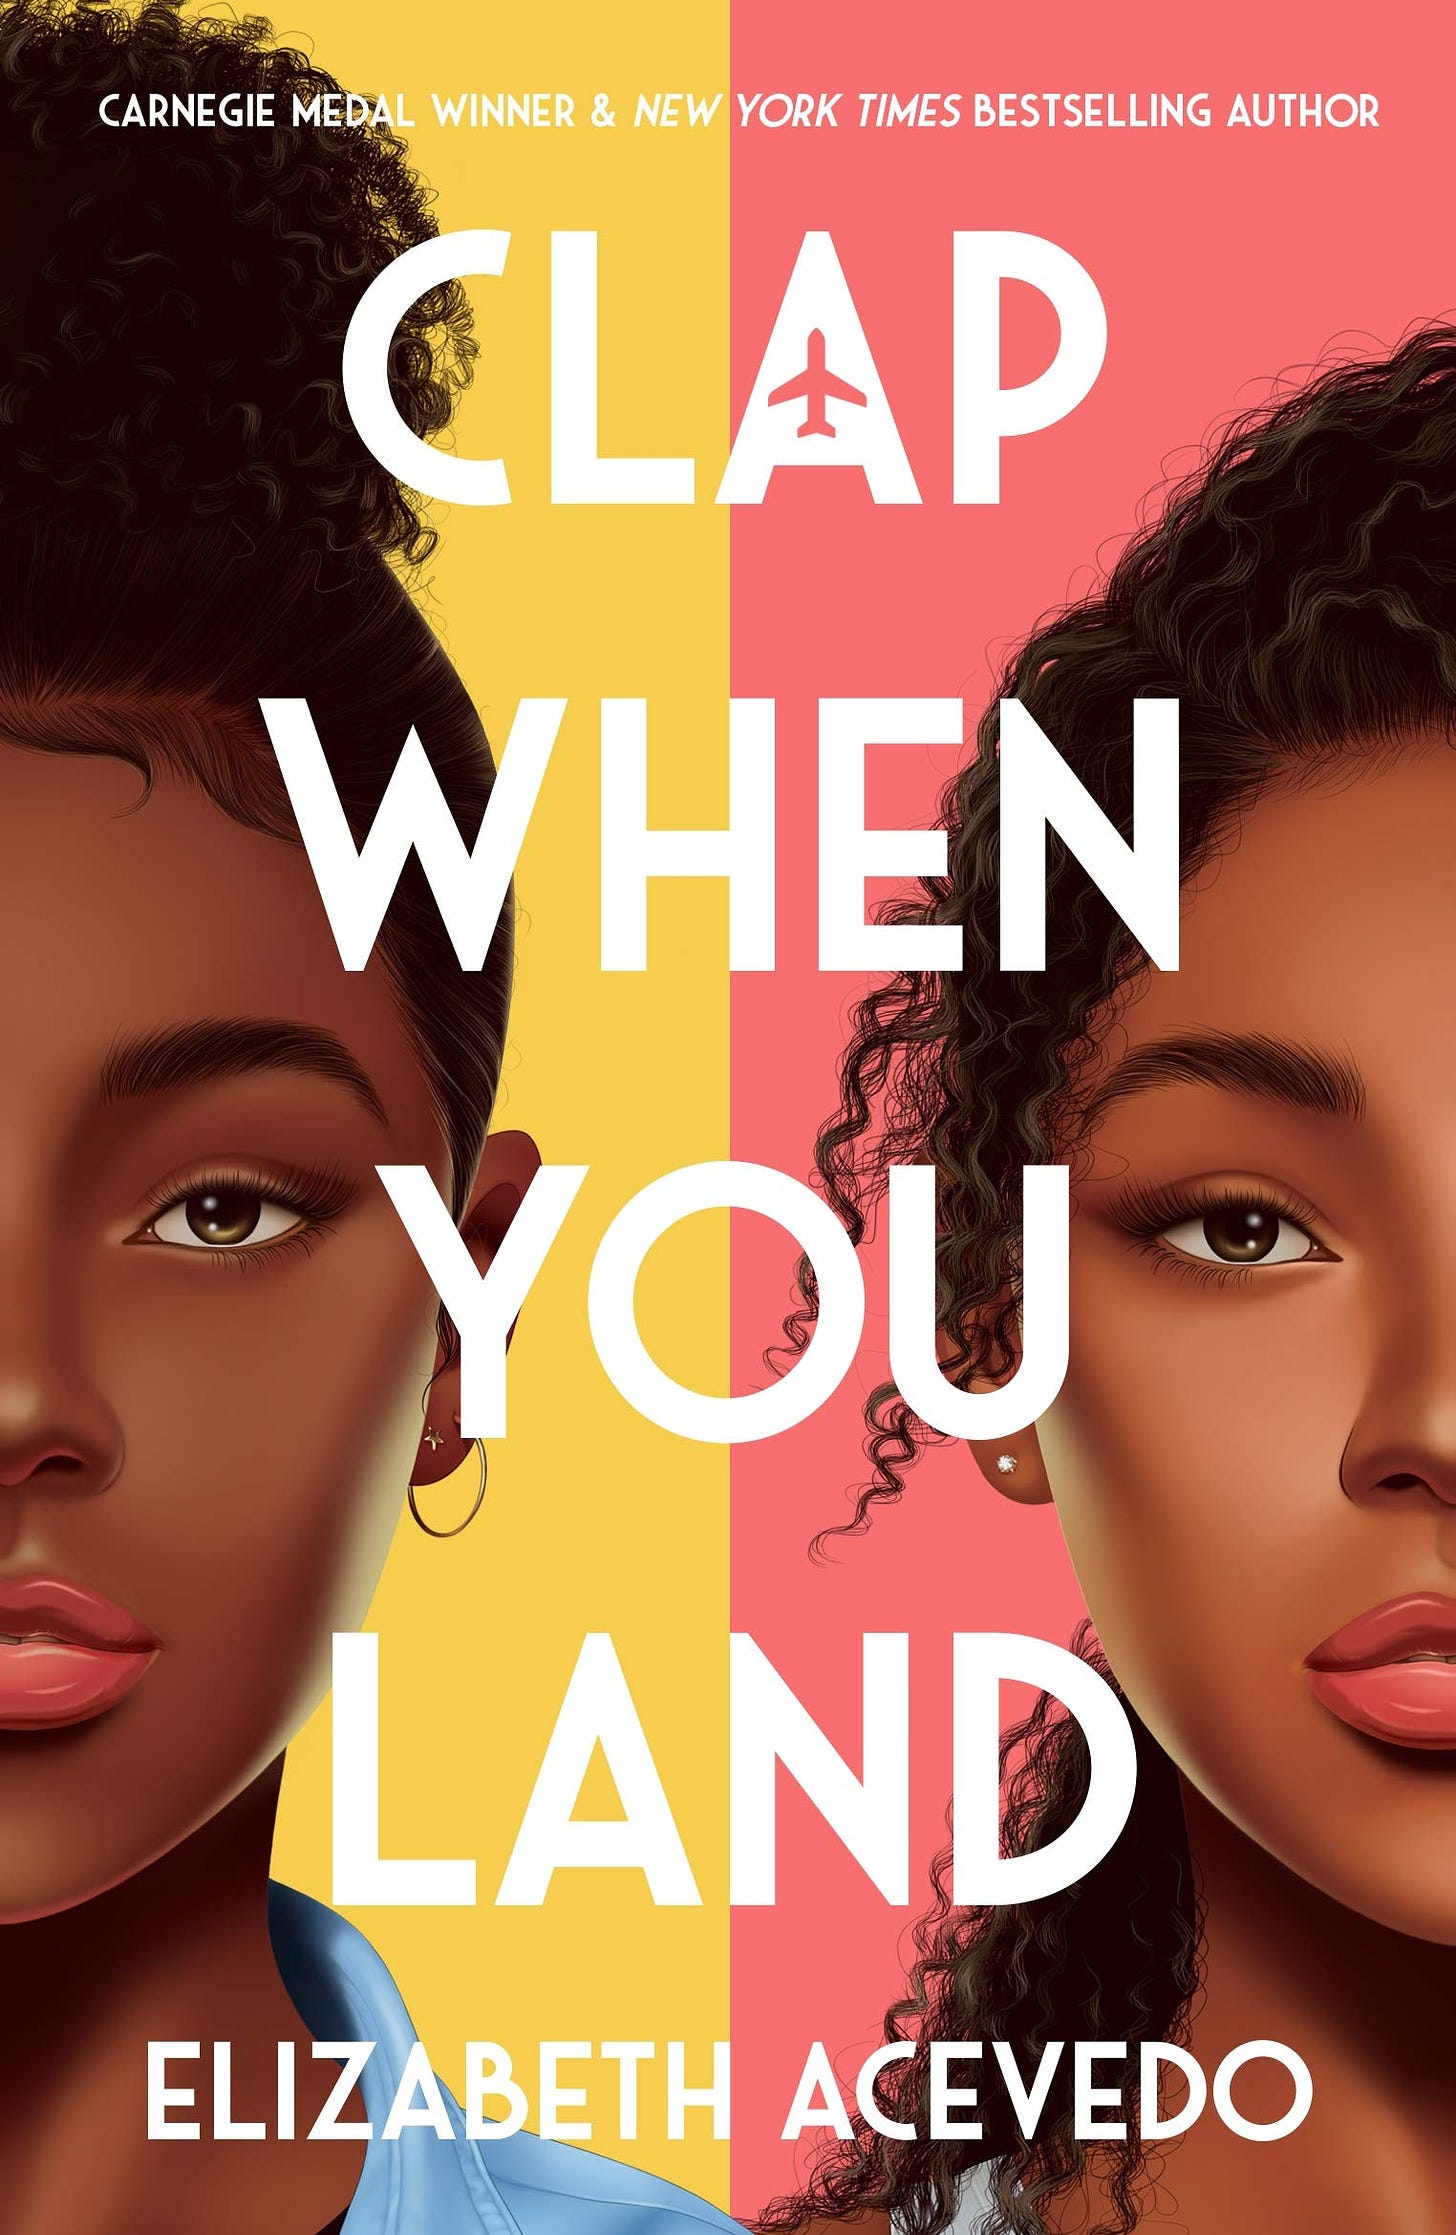 Clap When You Land: Amazon.co.uk: Acevedo, Elizabeth: Books